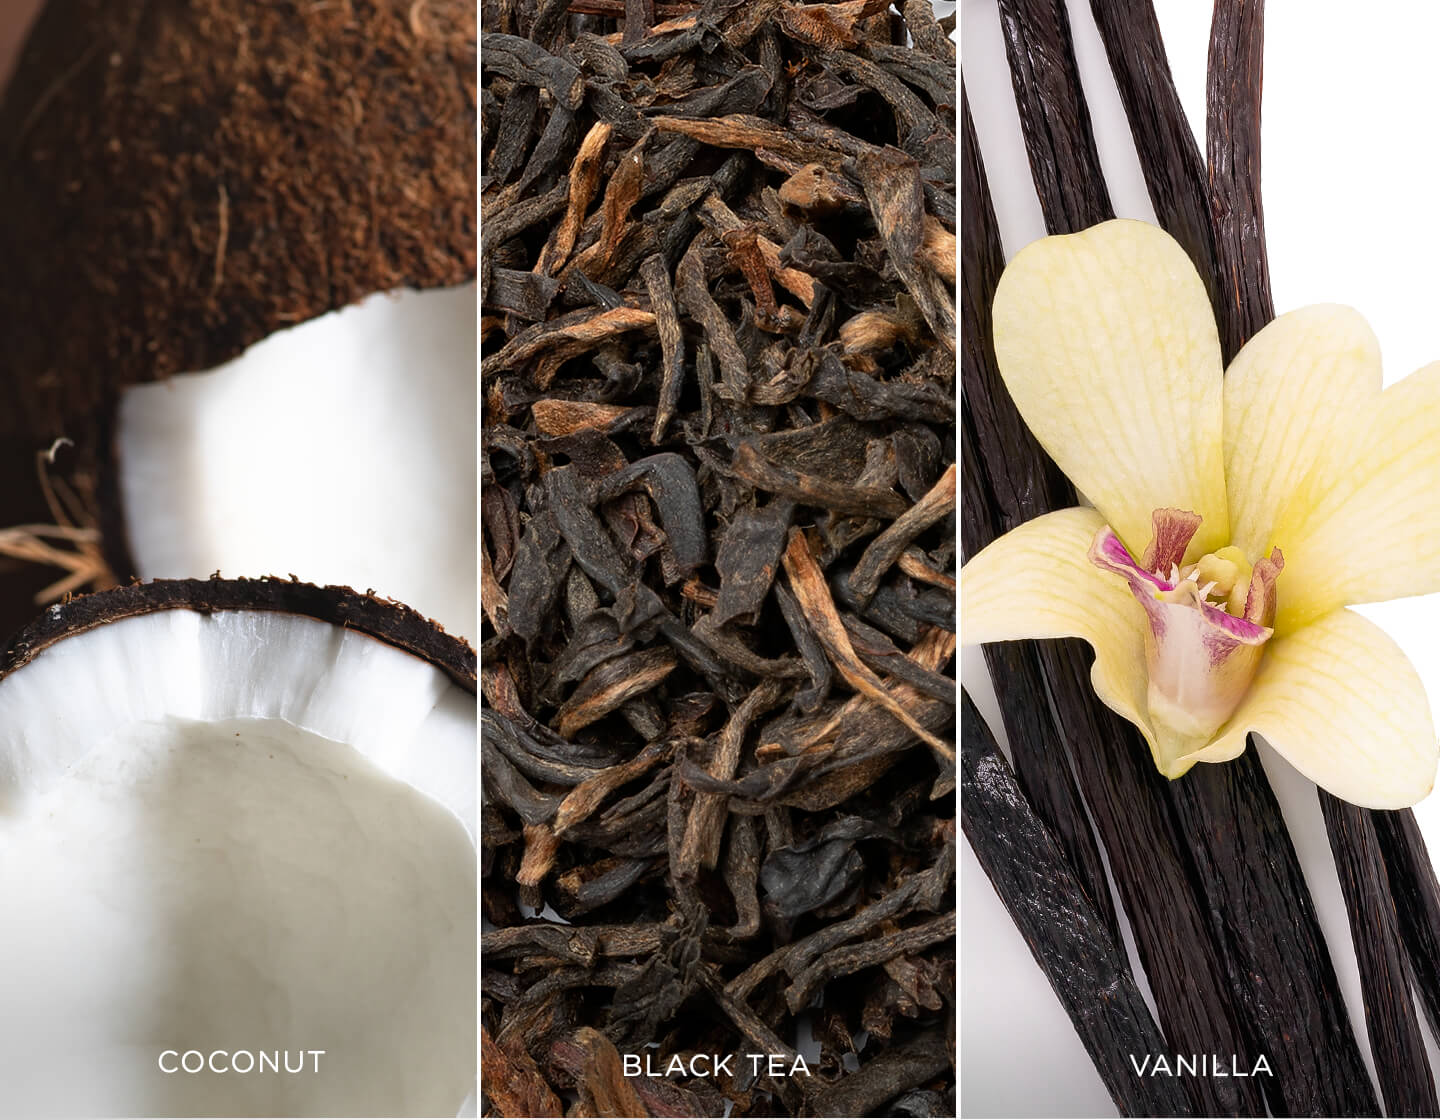 Orchid Vanilla ingredients: Coconut, vanilla bean and black tea